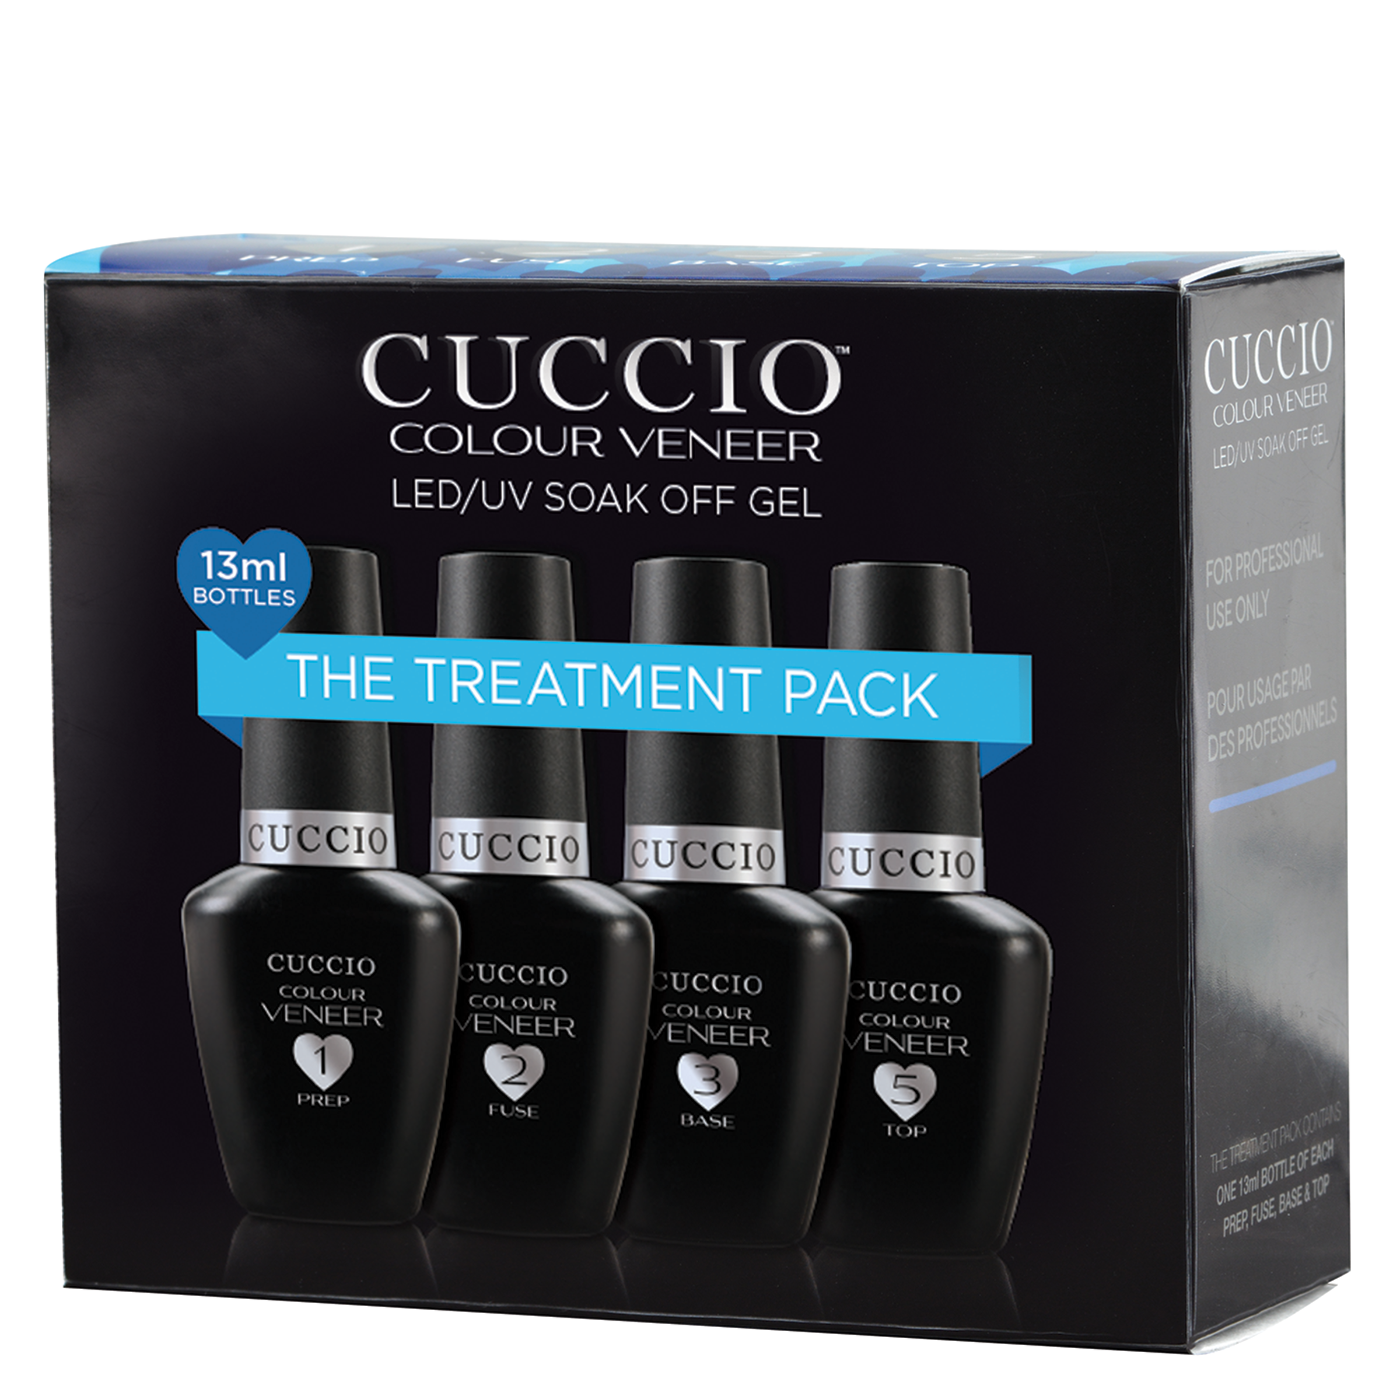 Colour Veneer Soak Off Gel "The Treatment Pack"